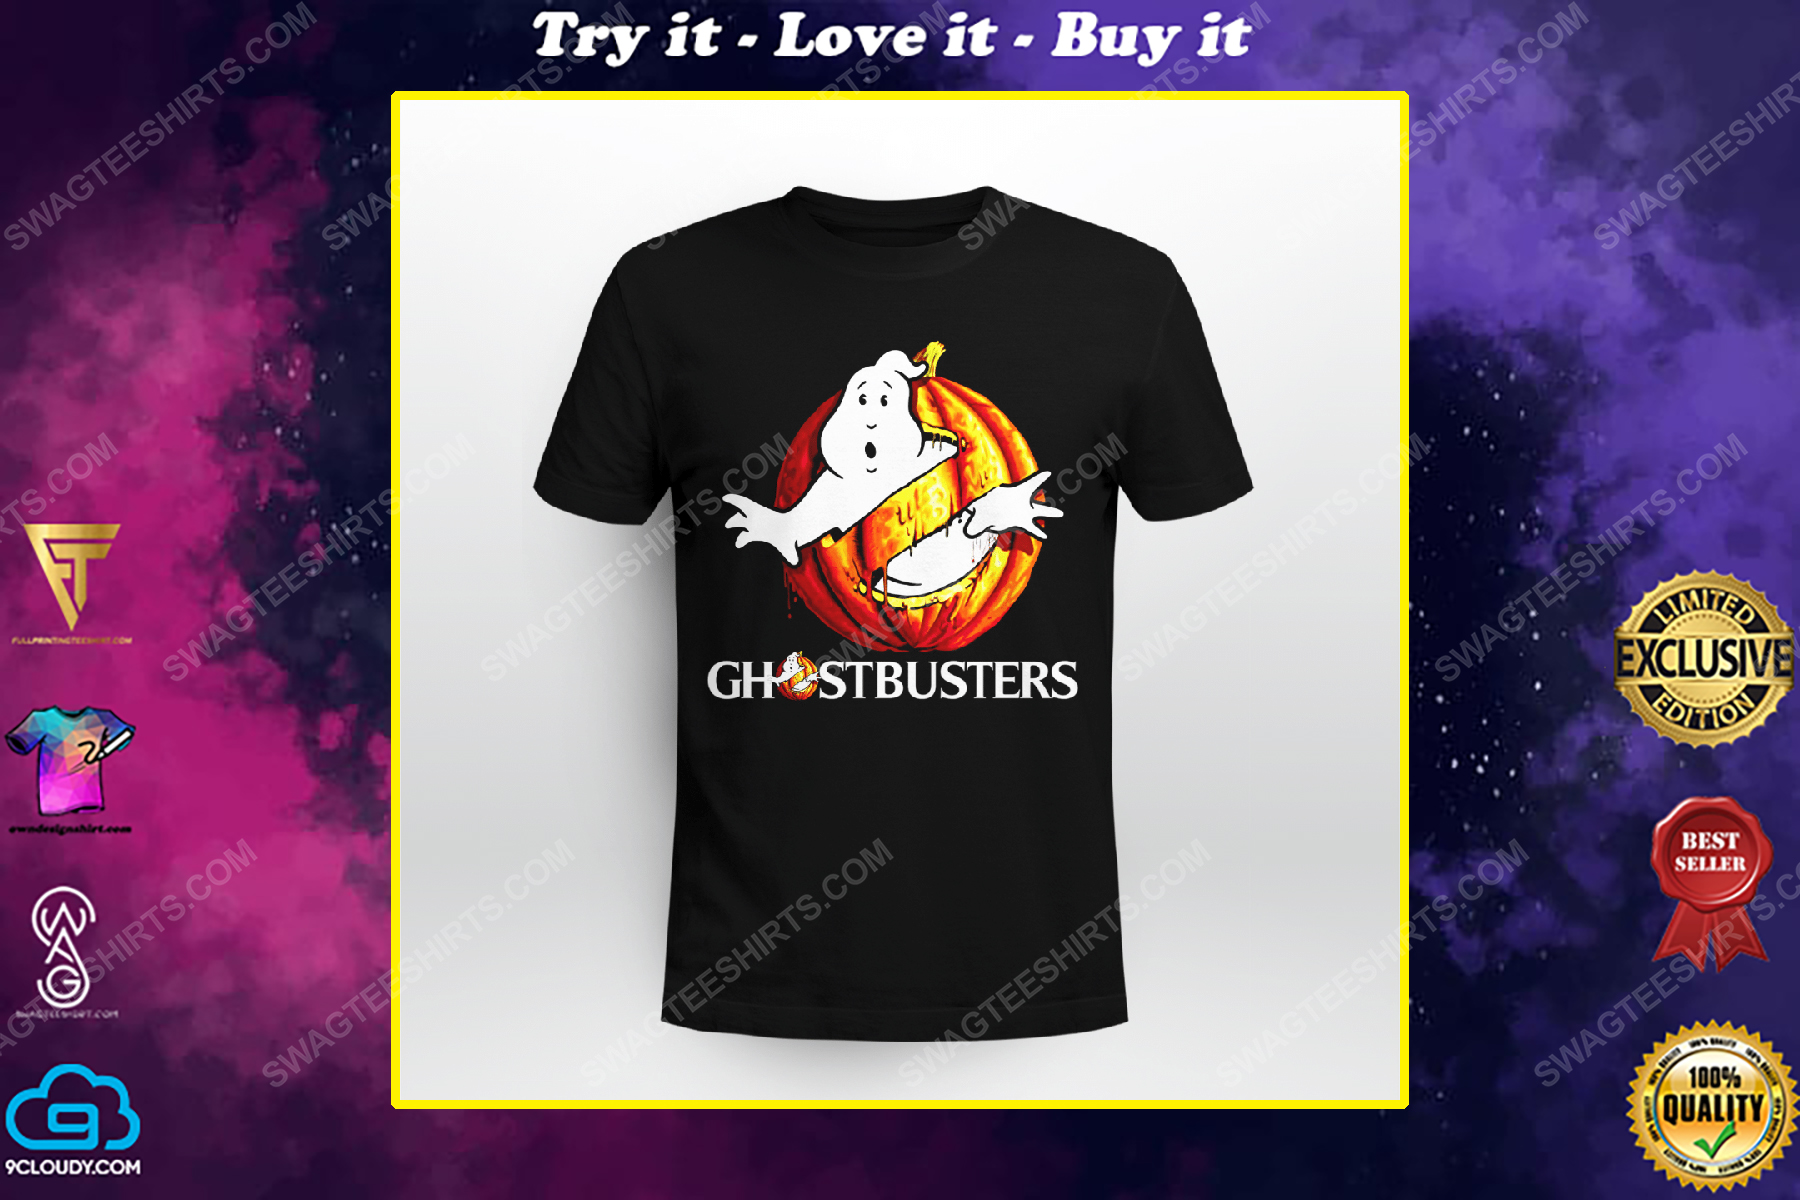 Ghostbusters with halloween pumpkin shirt